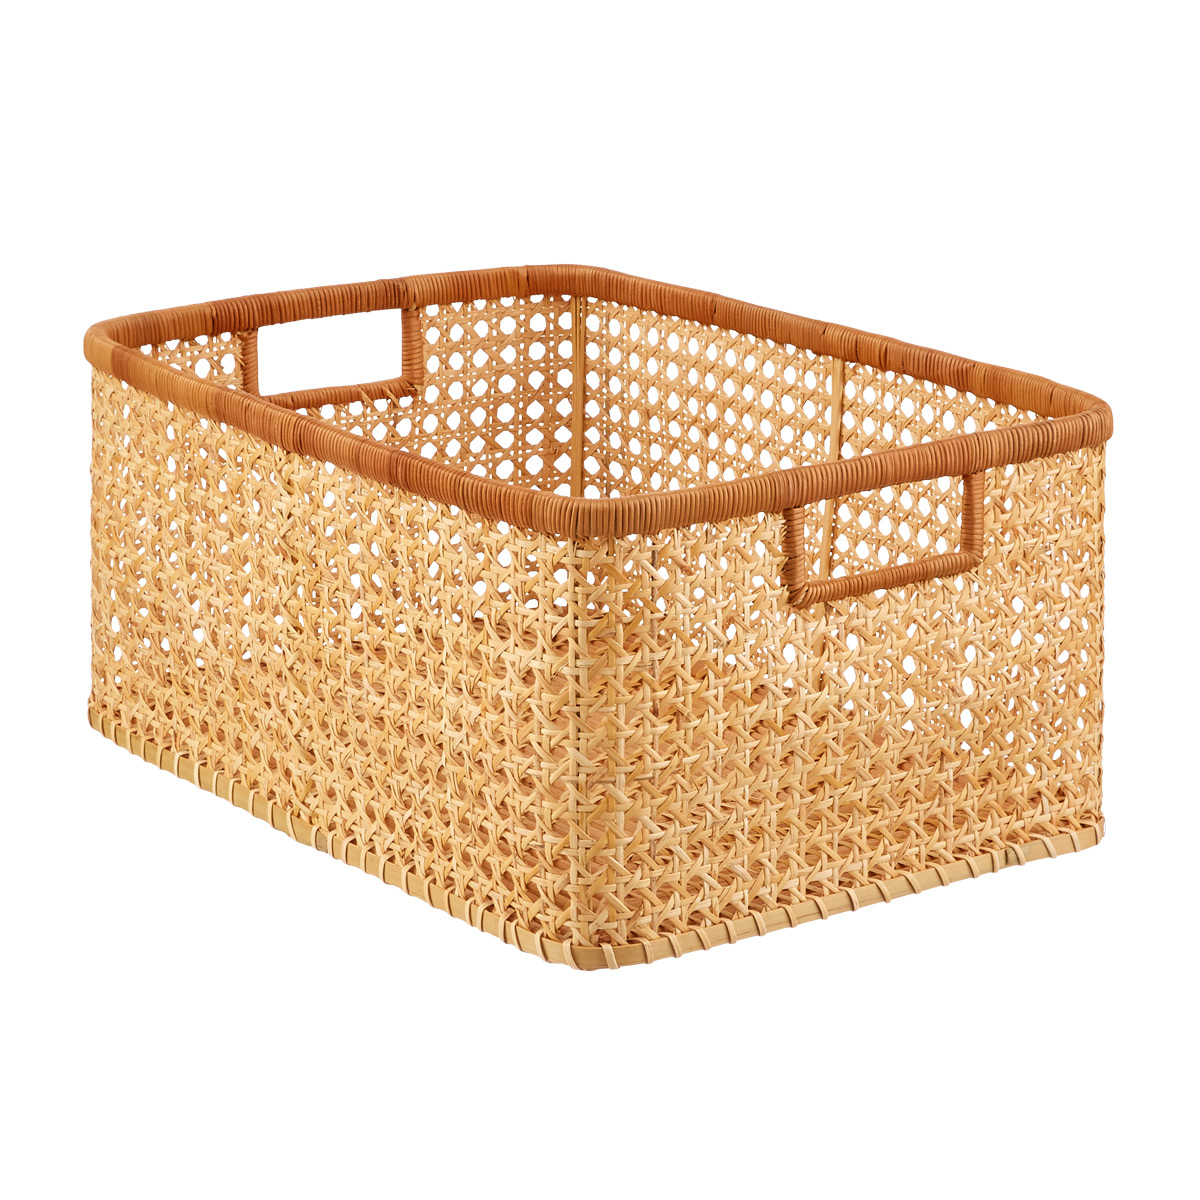 Wicker Baskets Woven Storage Bins, Decorative Bins For Shelves